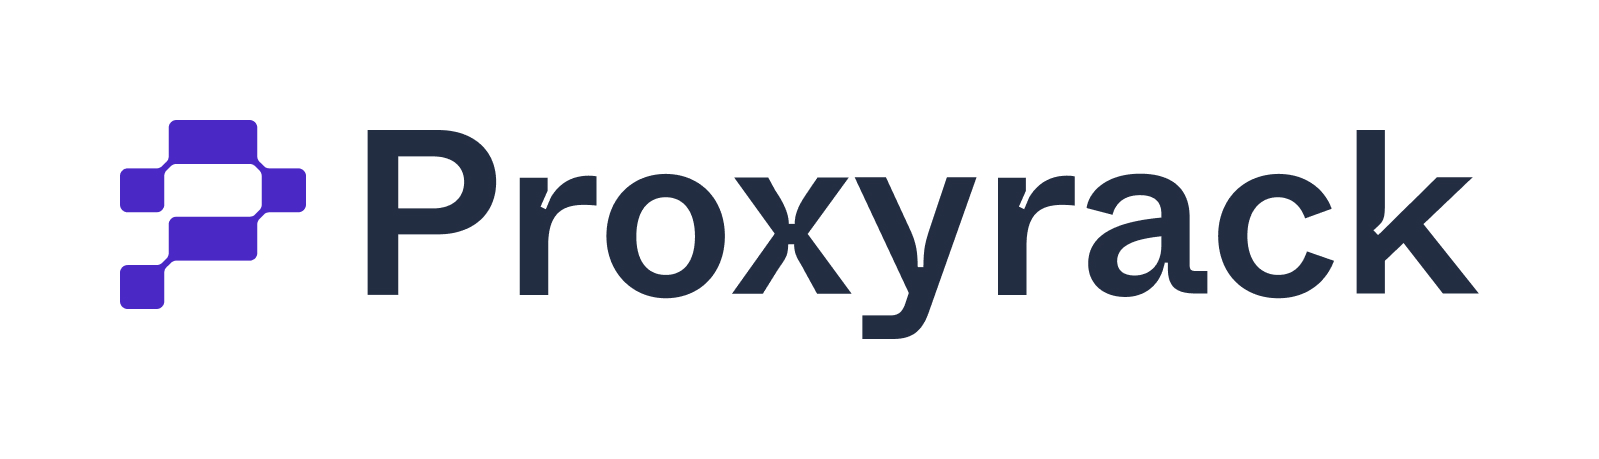 Proxyrack Peer Logo